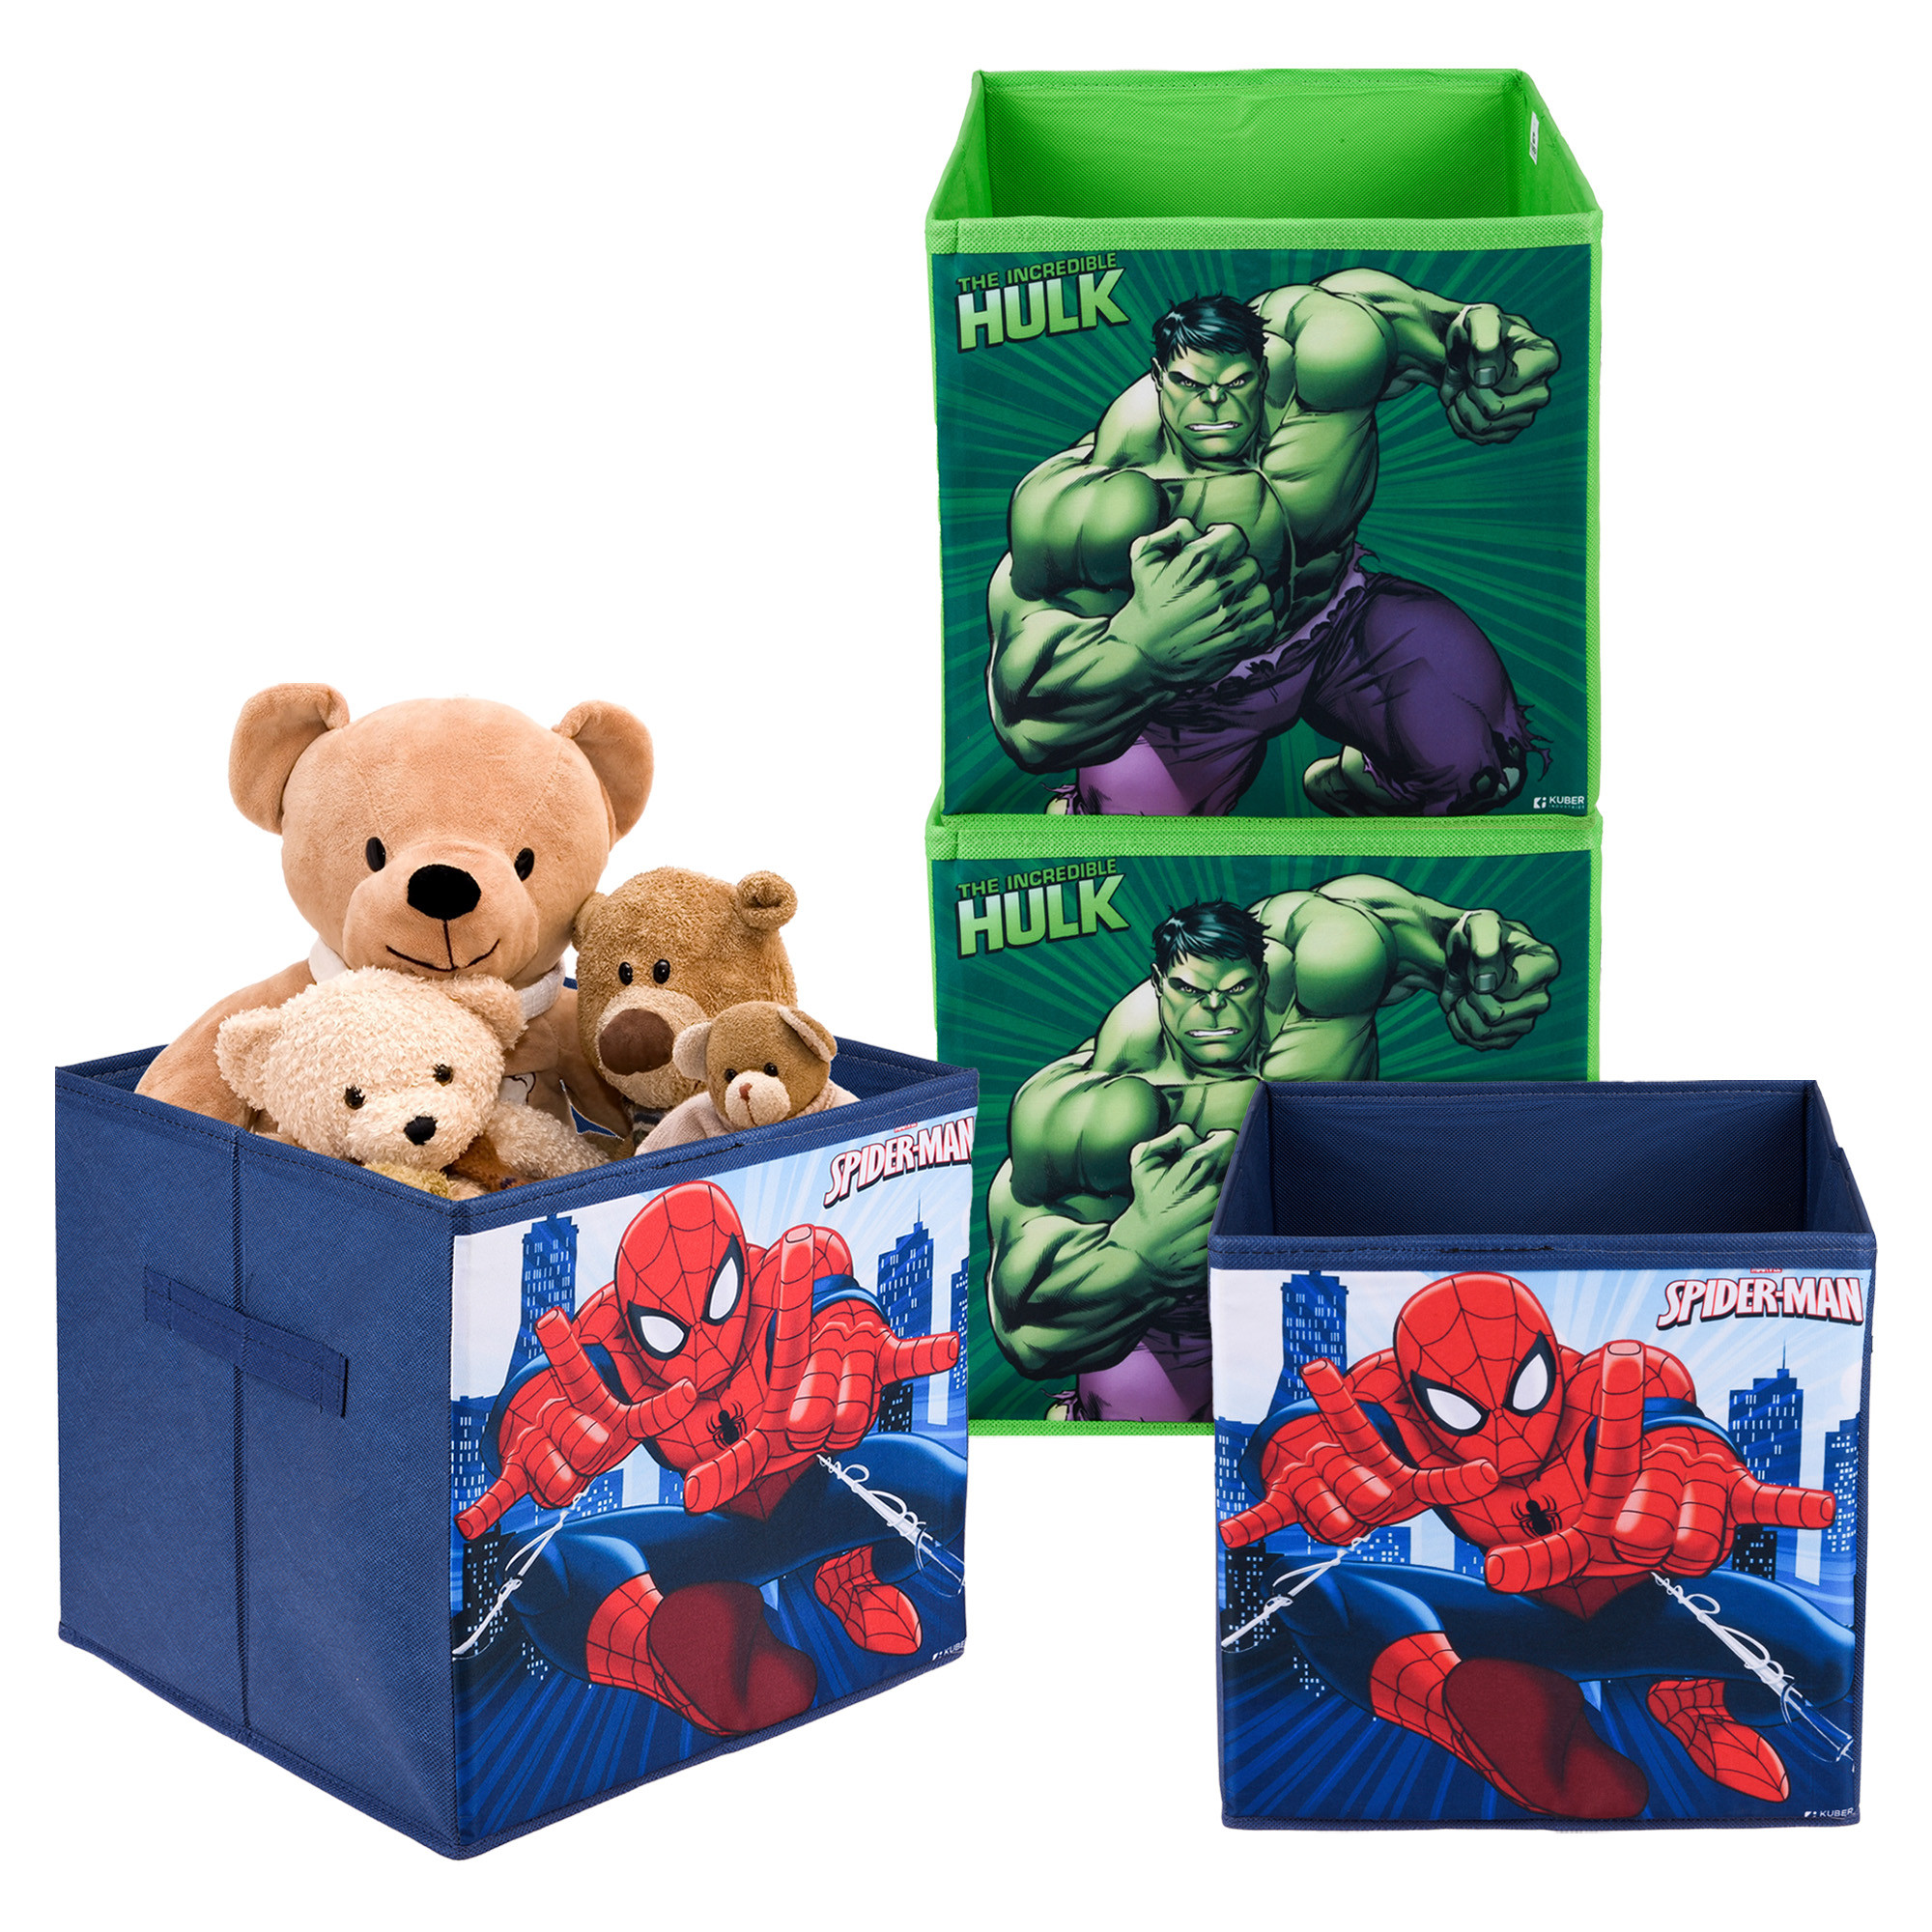 Kuber Industries Storage Box | Square Toy Storage Box | Wardrobe Organizer for Clothes-Books-Toys-Stationary | Drawer Organizer Box with Handle | Marvel-Print | Navy Blue & Green